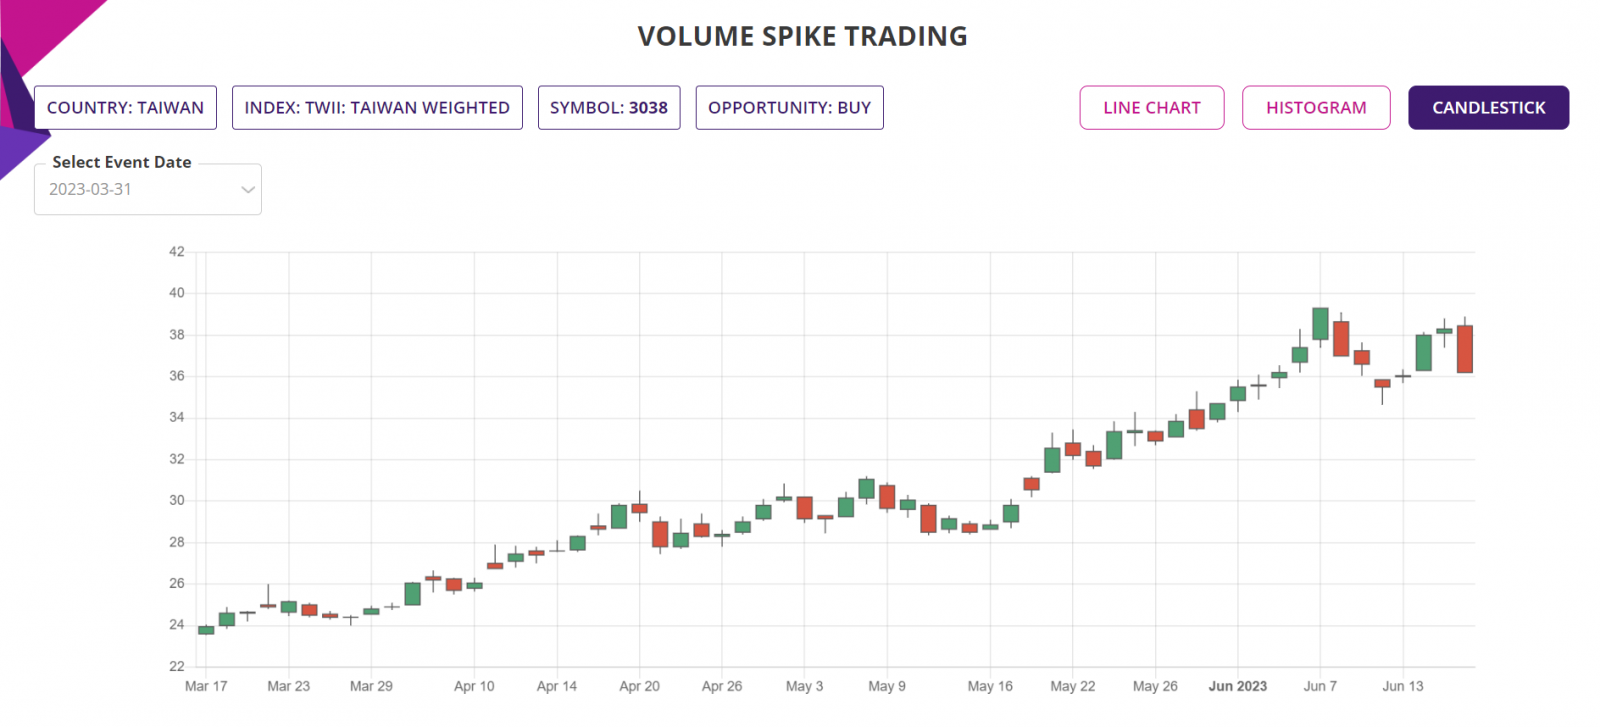 Volume spike trading strategy, detailed report, Candlestick chart, TSE Stocks